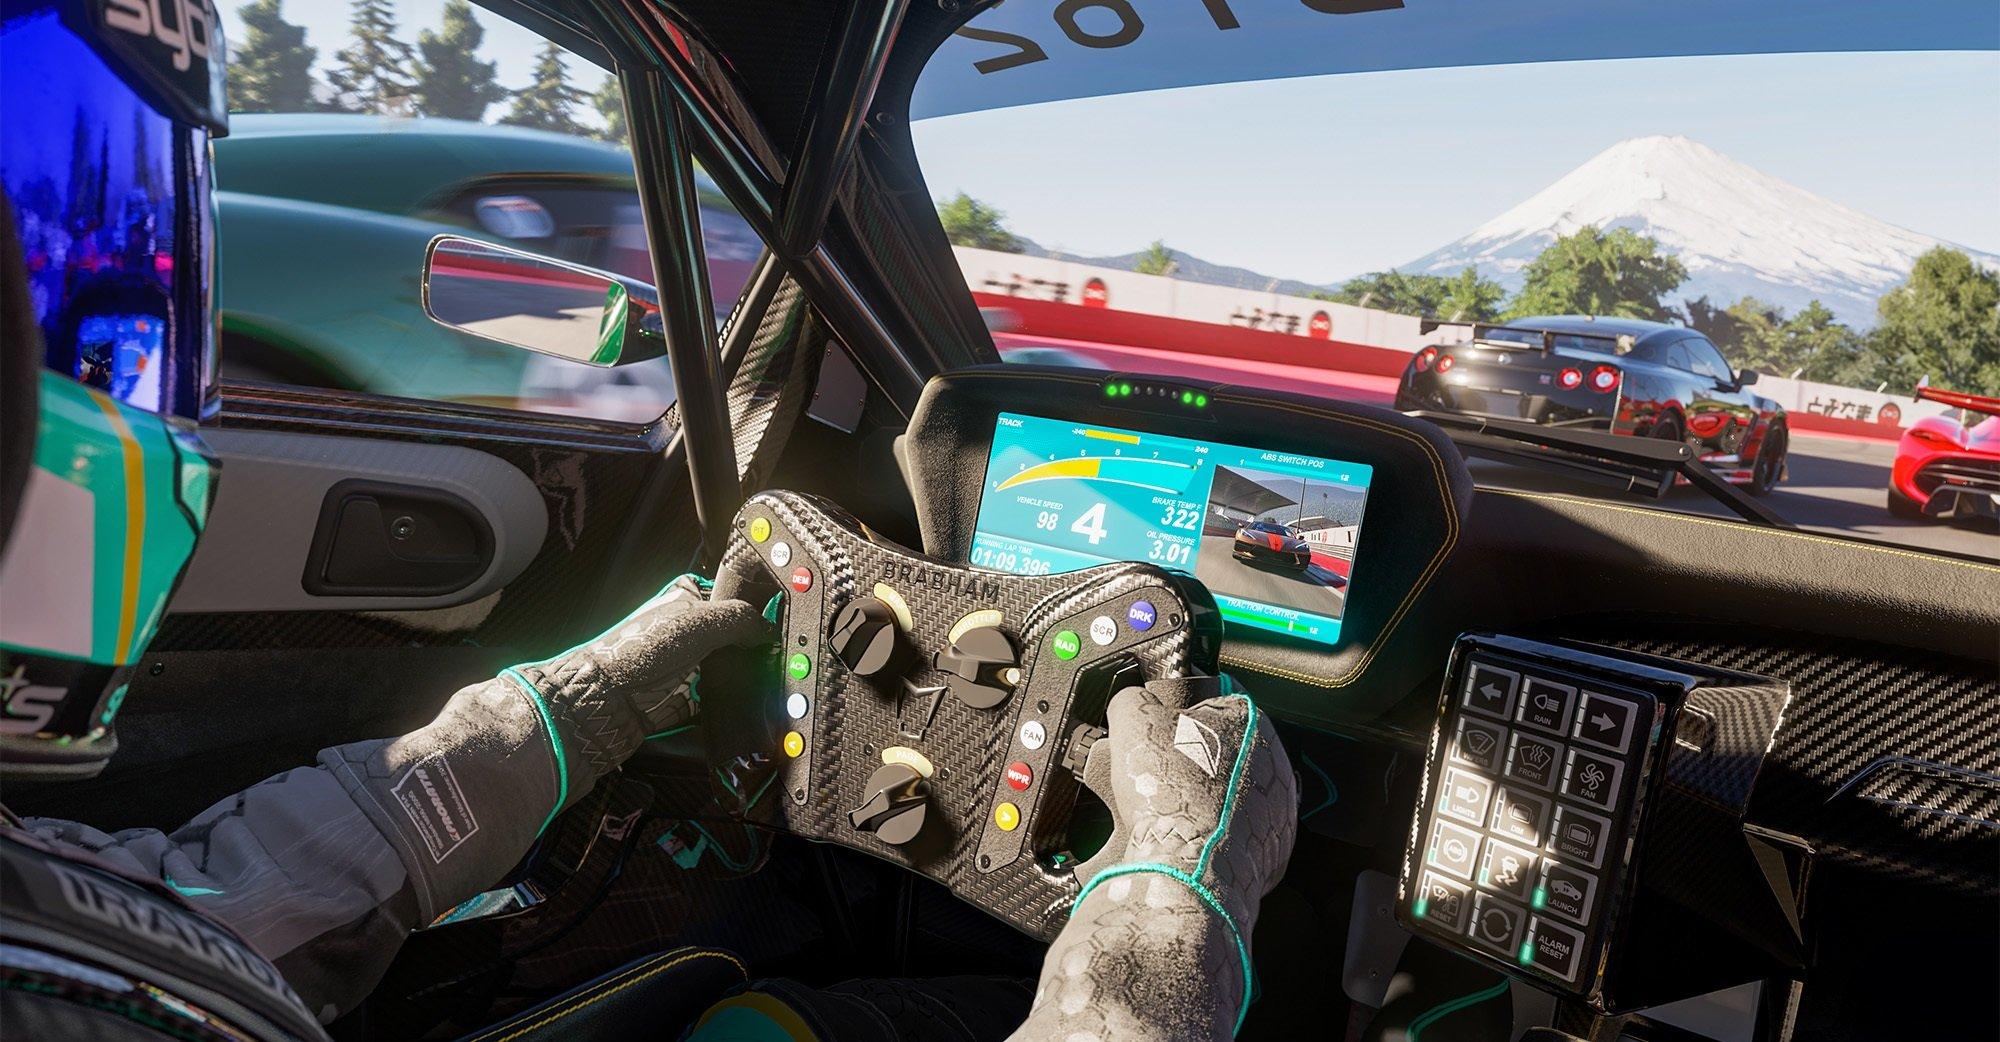 Comprar Forza Motorsport Premium Add-Ons Bundle (PC / Xbox ONE / Xbox  Series X